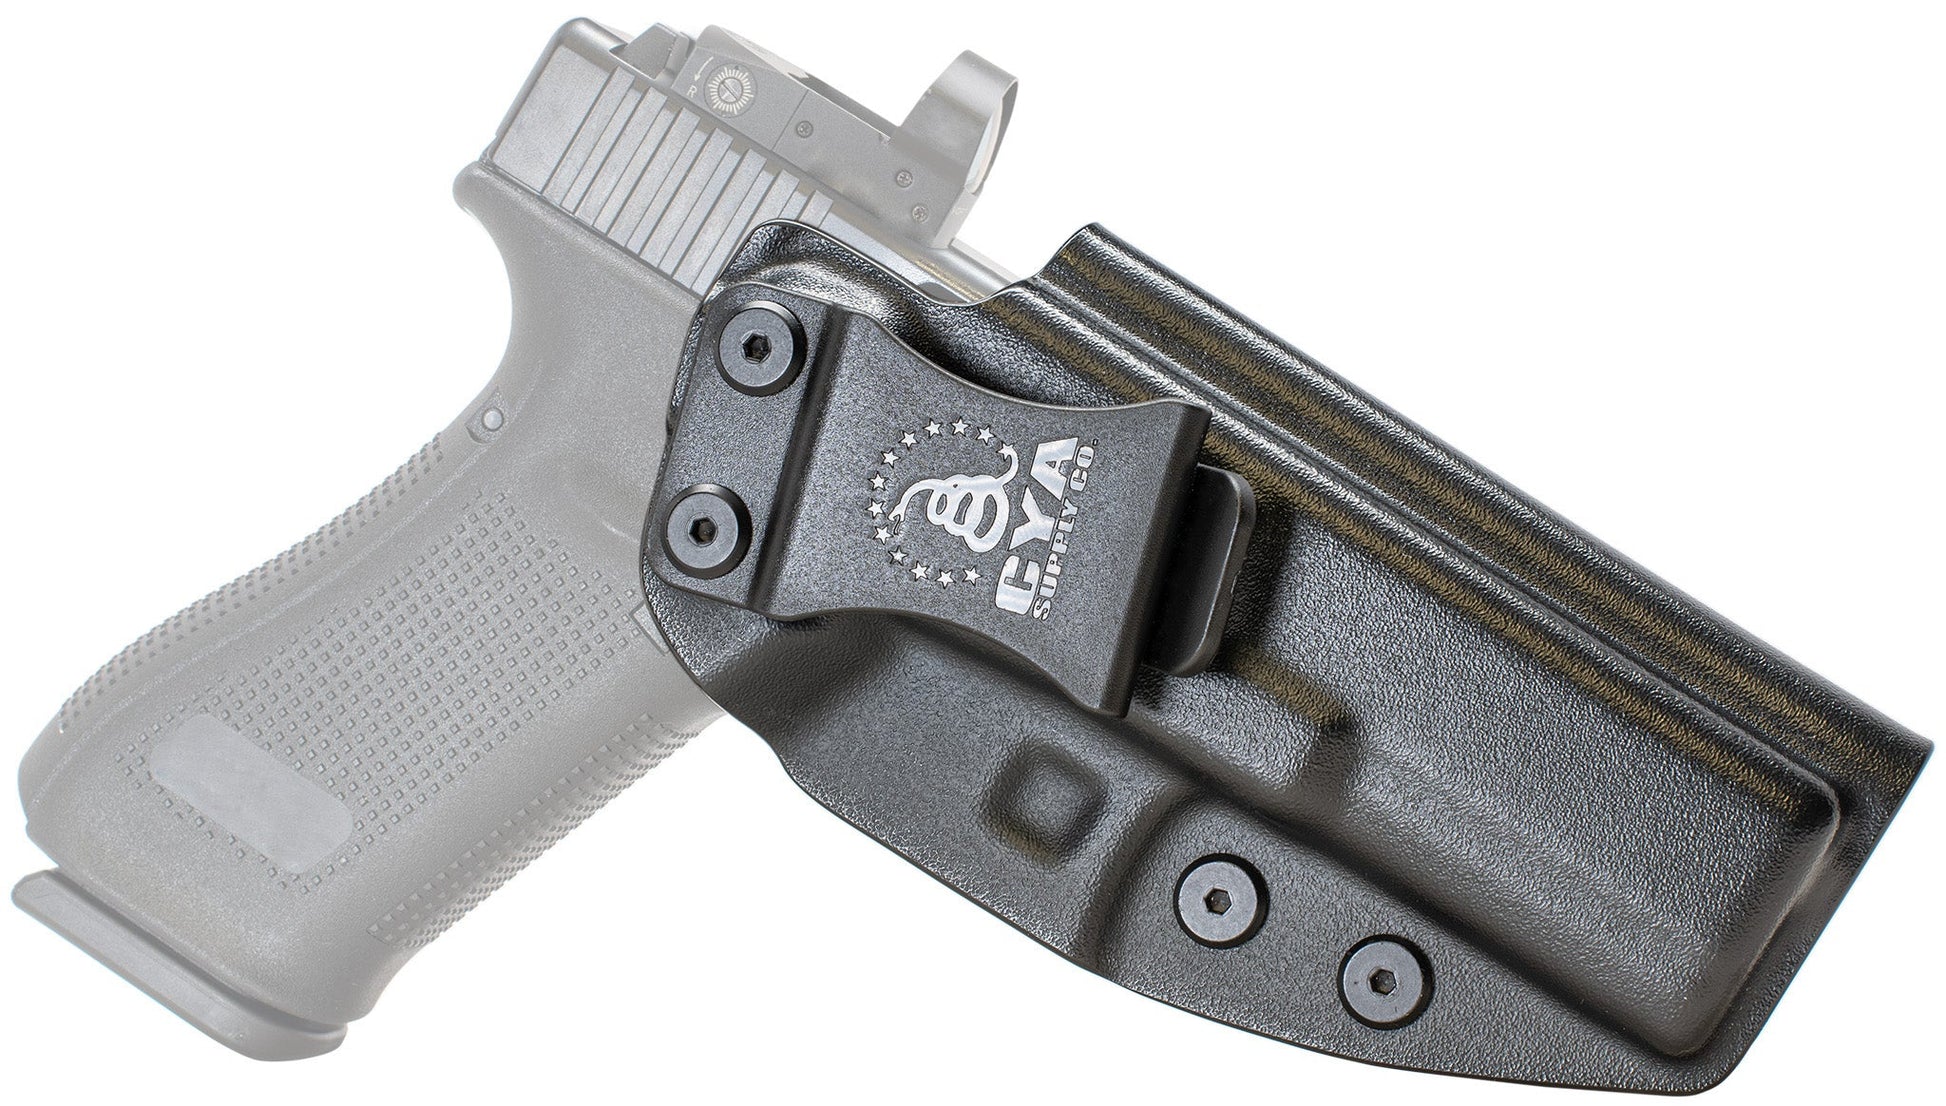 Glock 17 Holster, Concealed Carry Holster